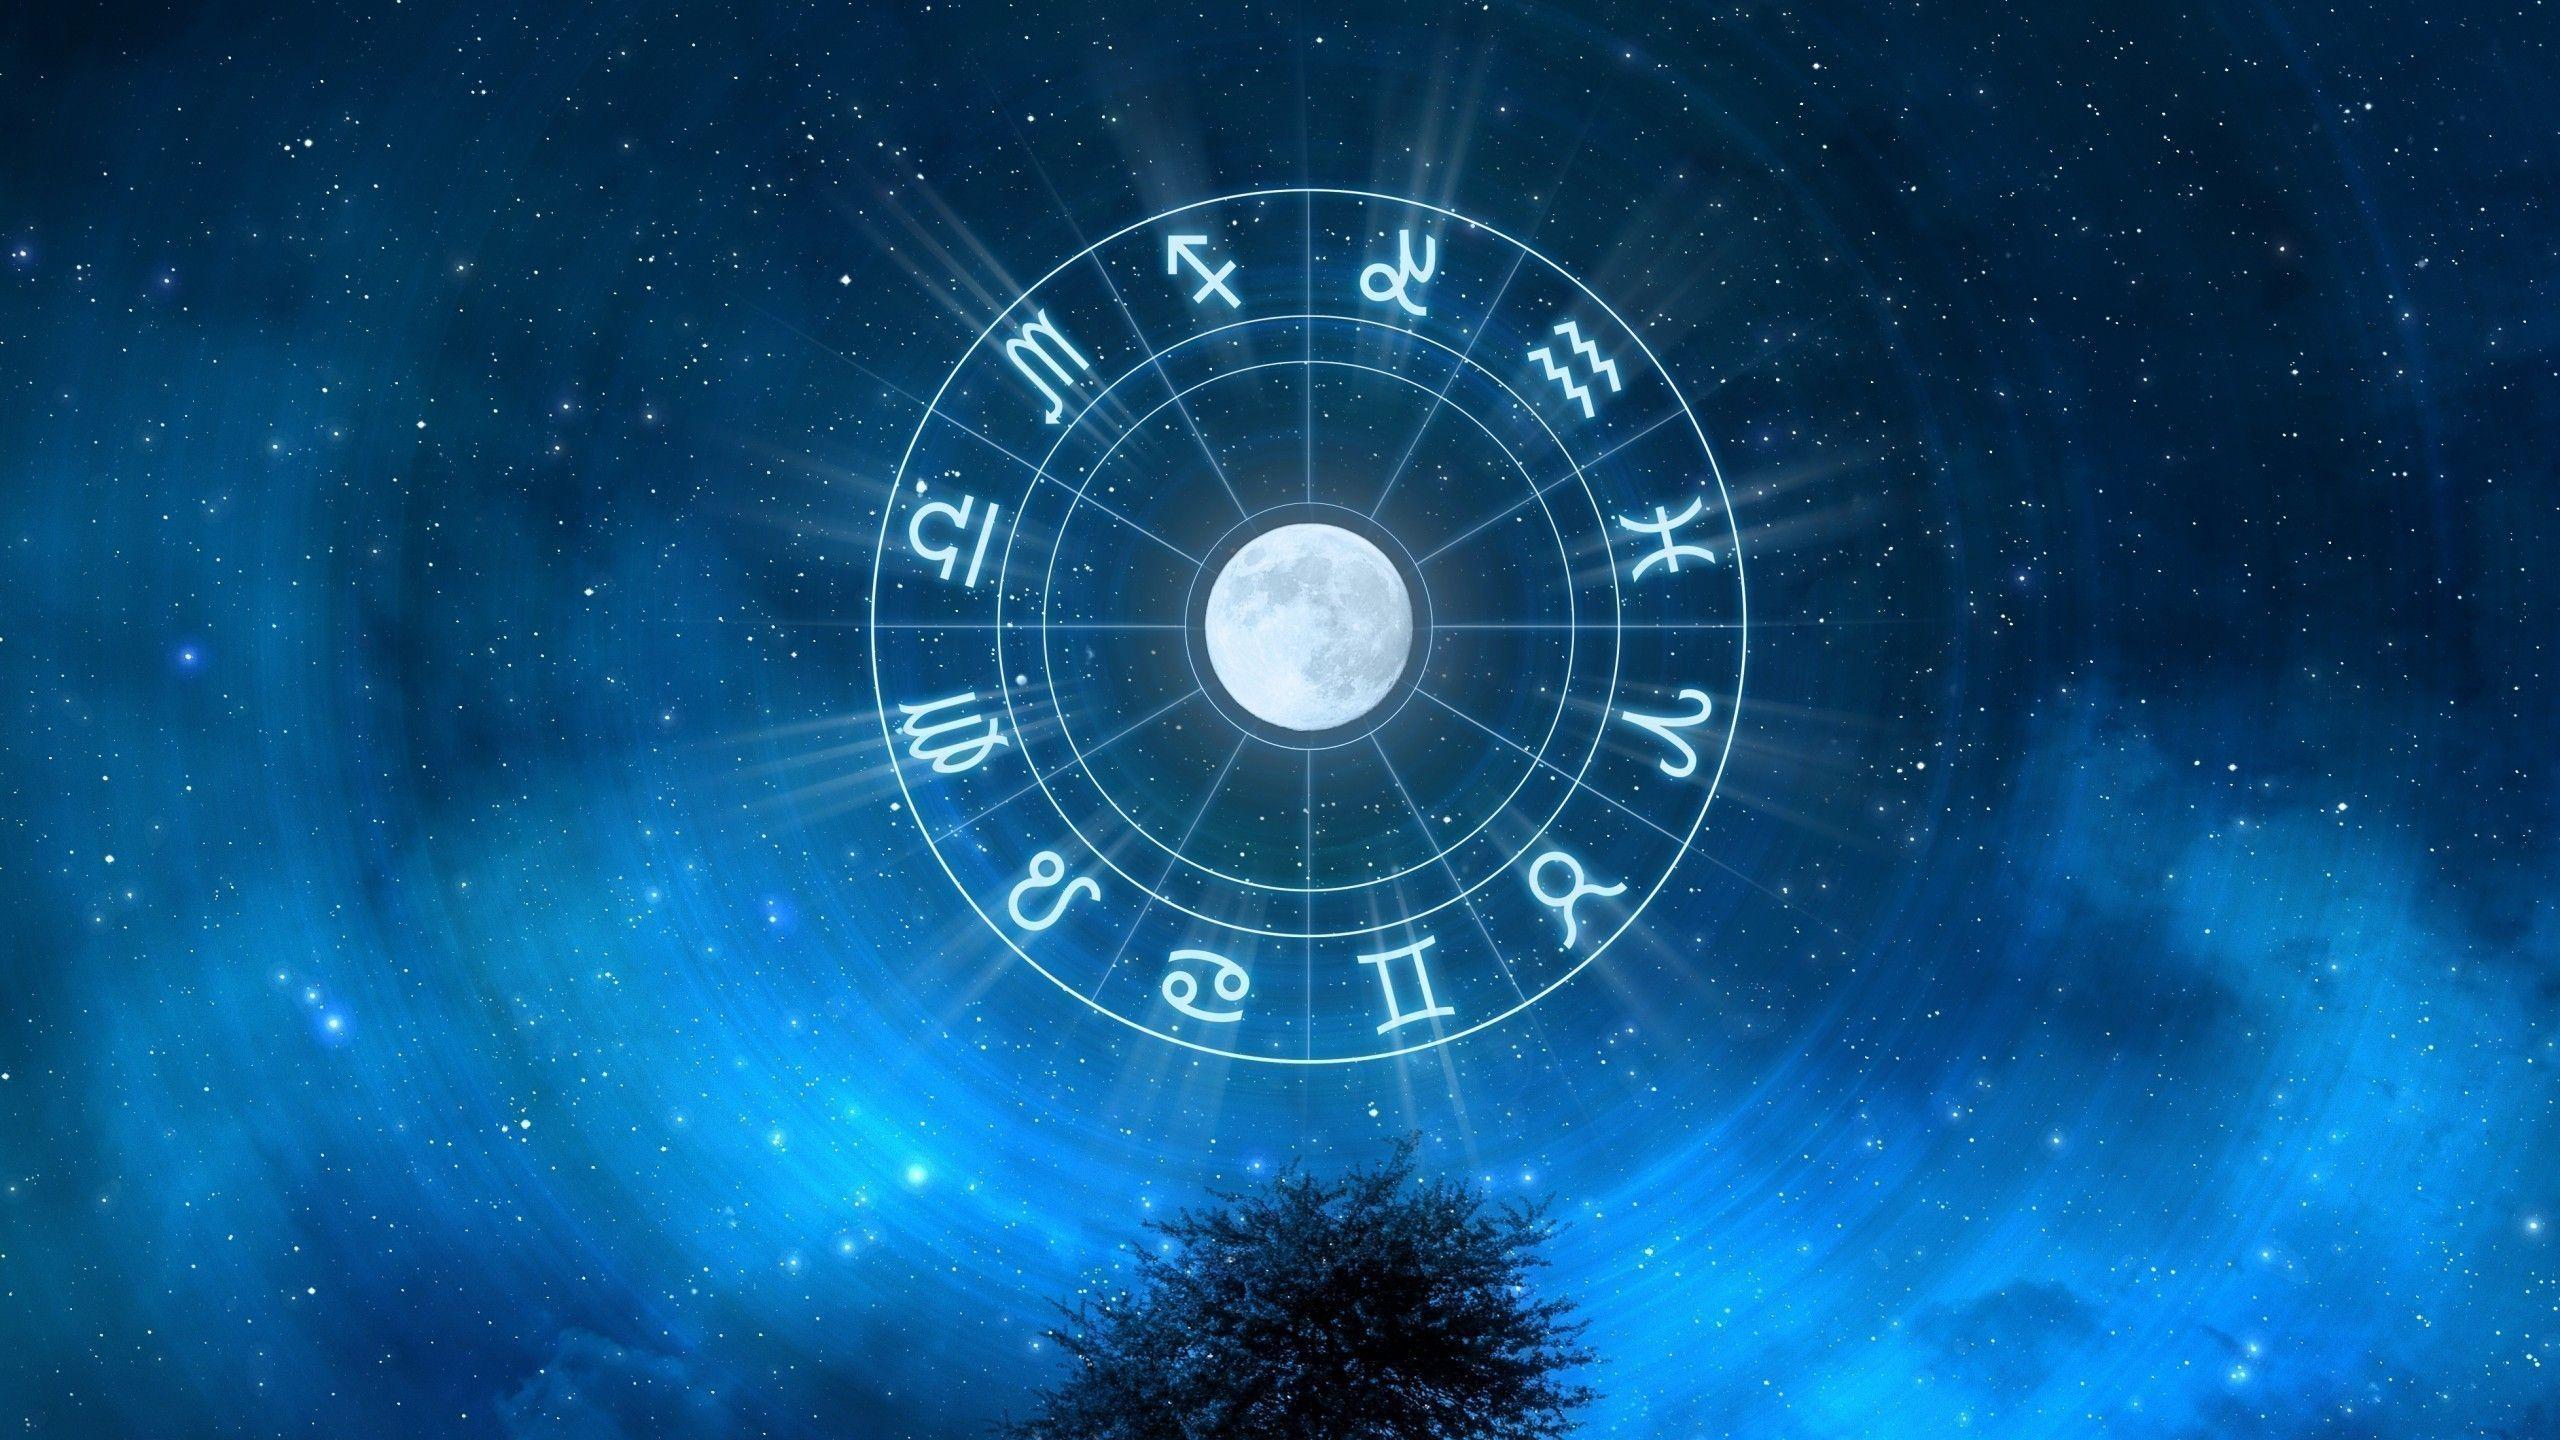 Astrology Wallpaper Download Free  PixelsTalkNet